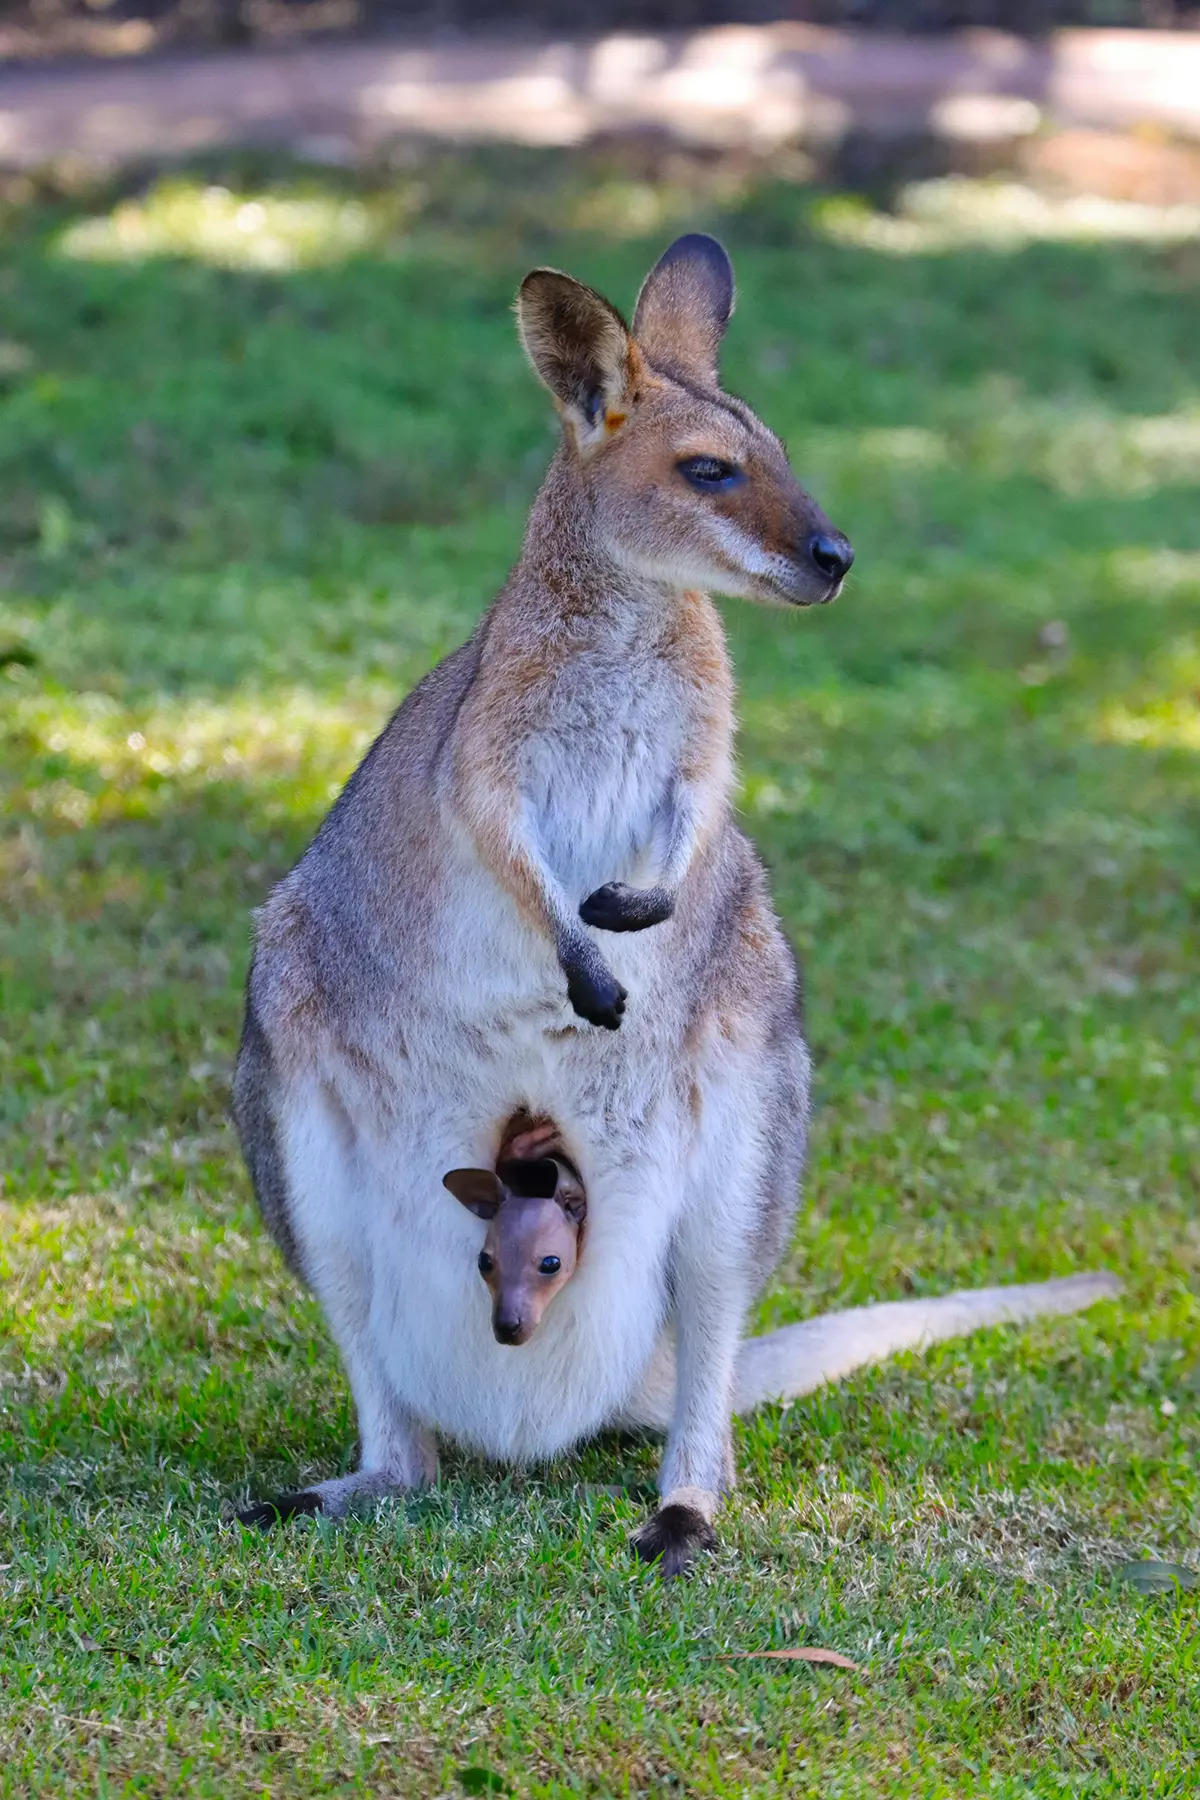 ​Kangaroo recognised as world's largest hopping animal​